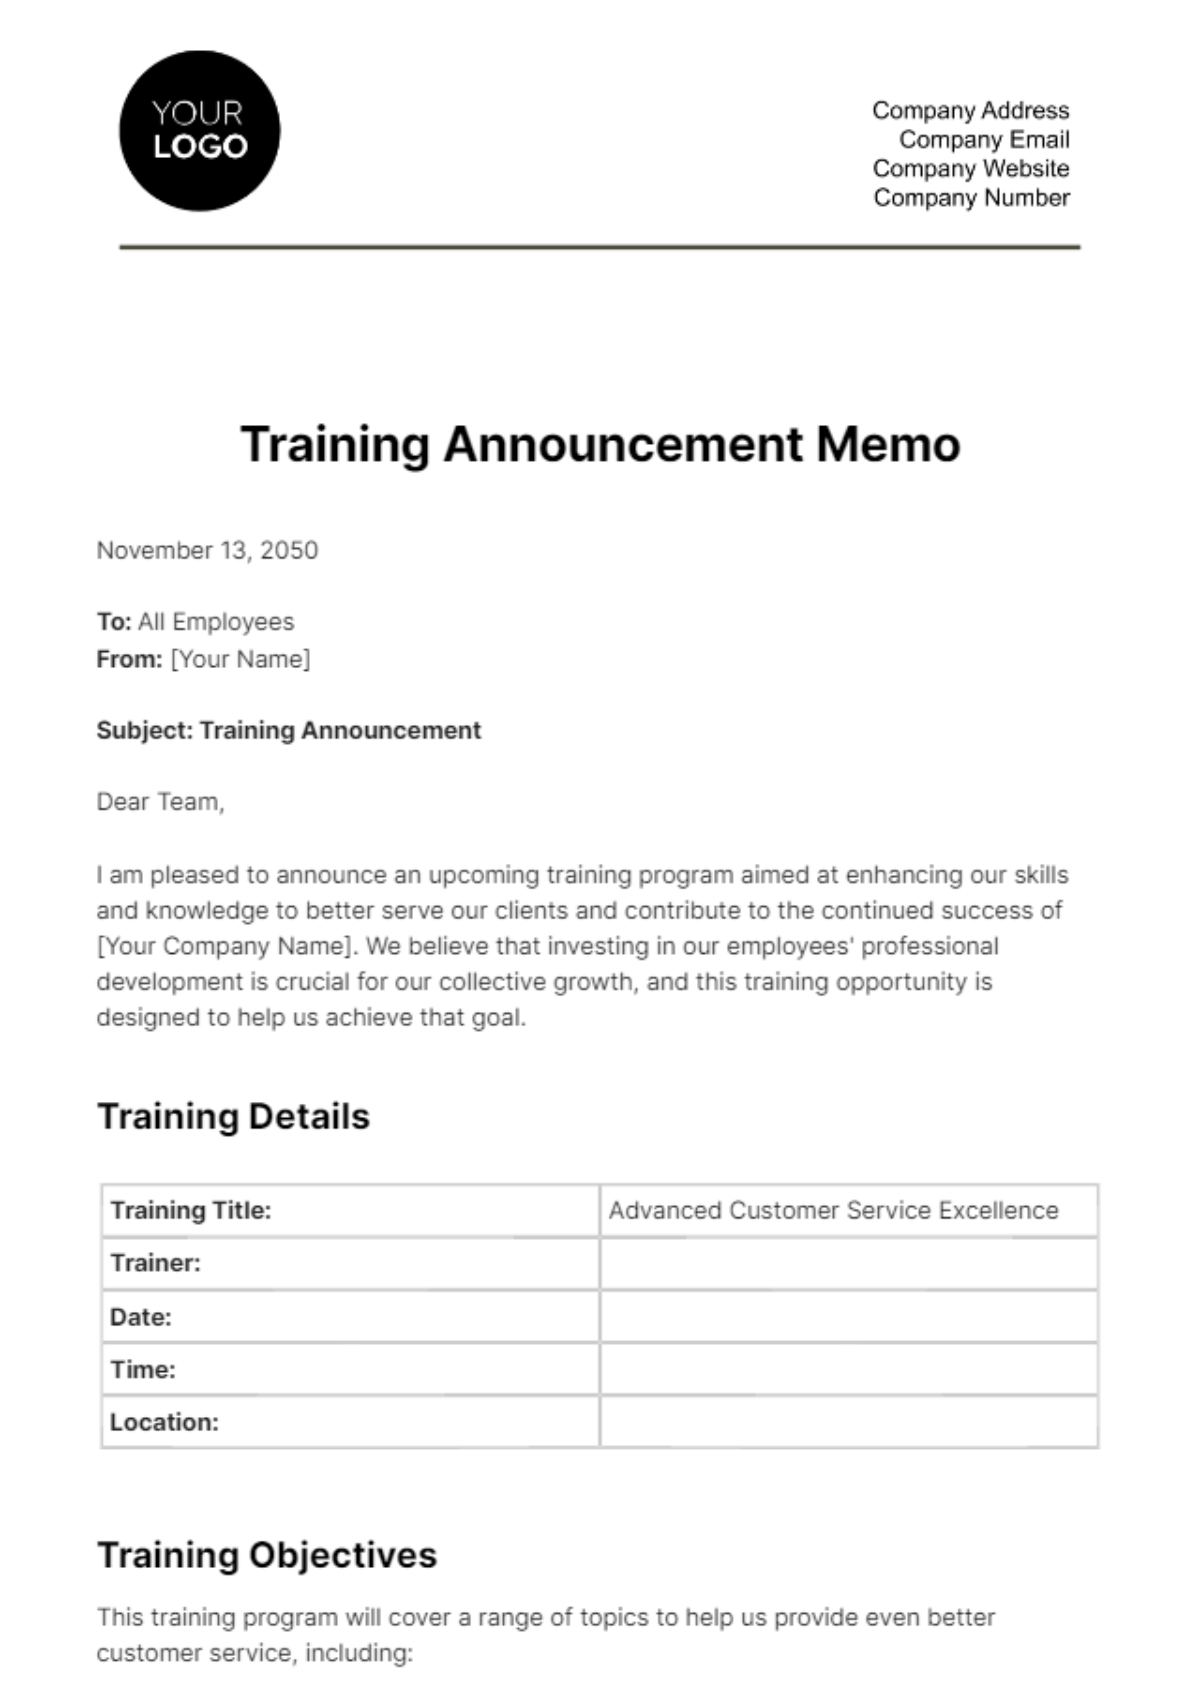 Free Training Announcement Memo HR Template